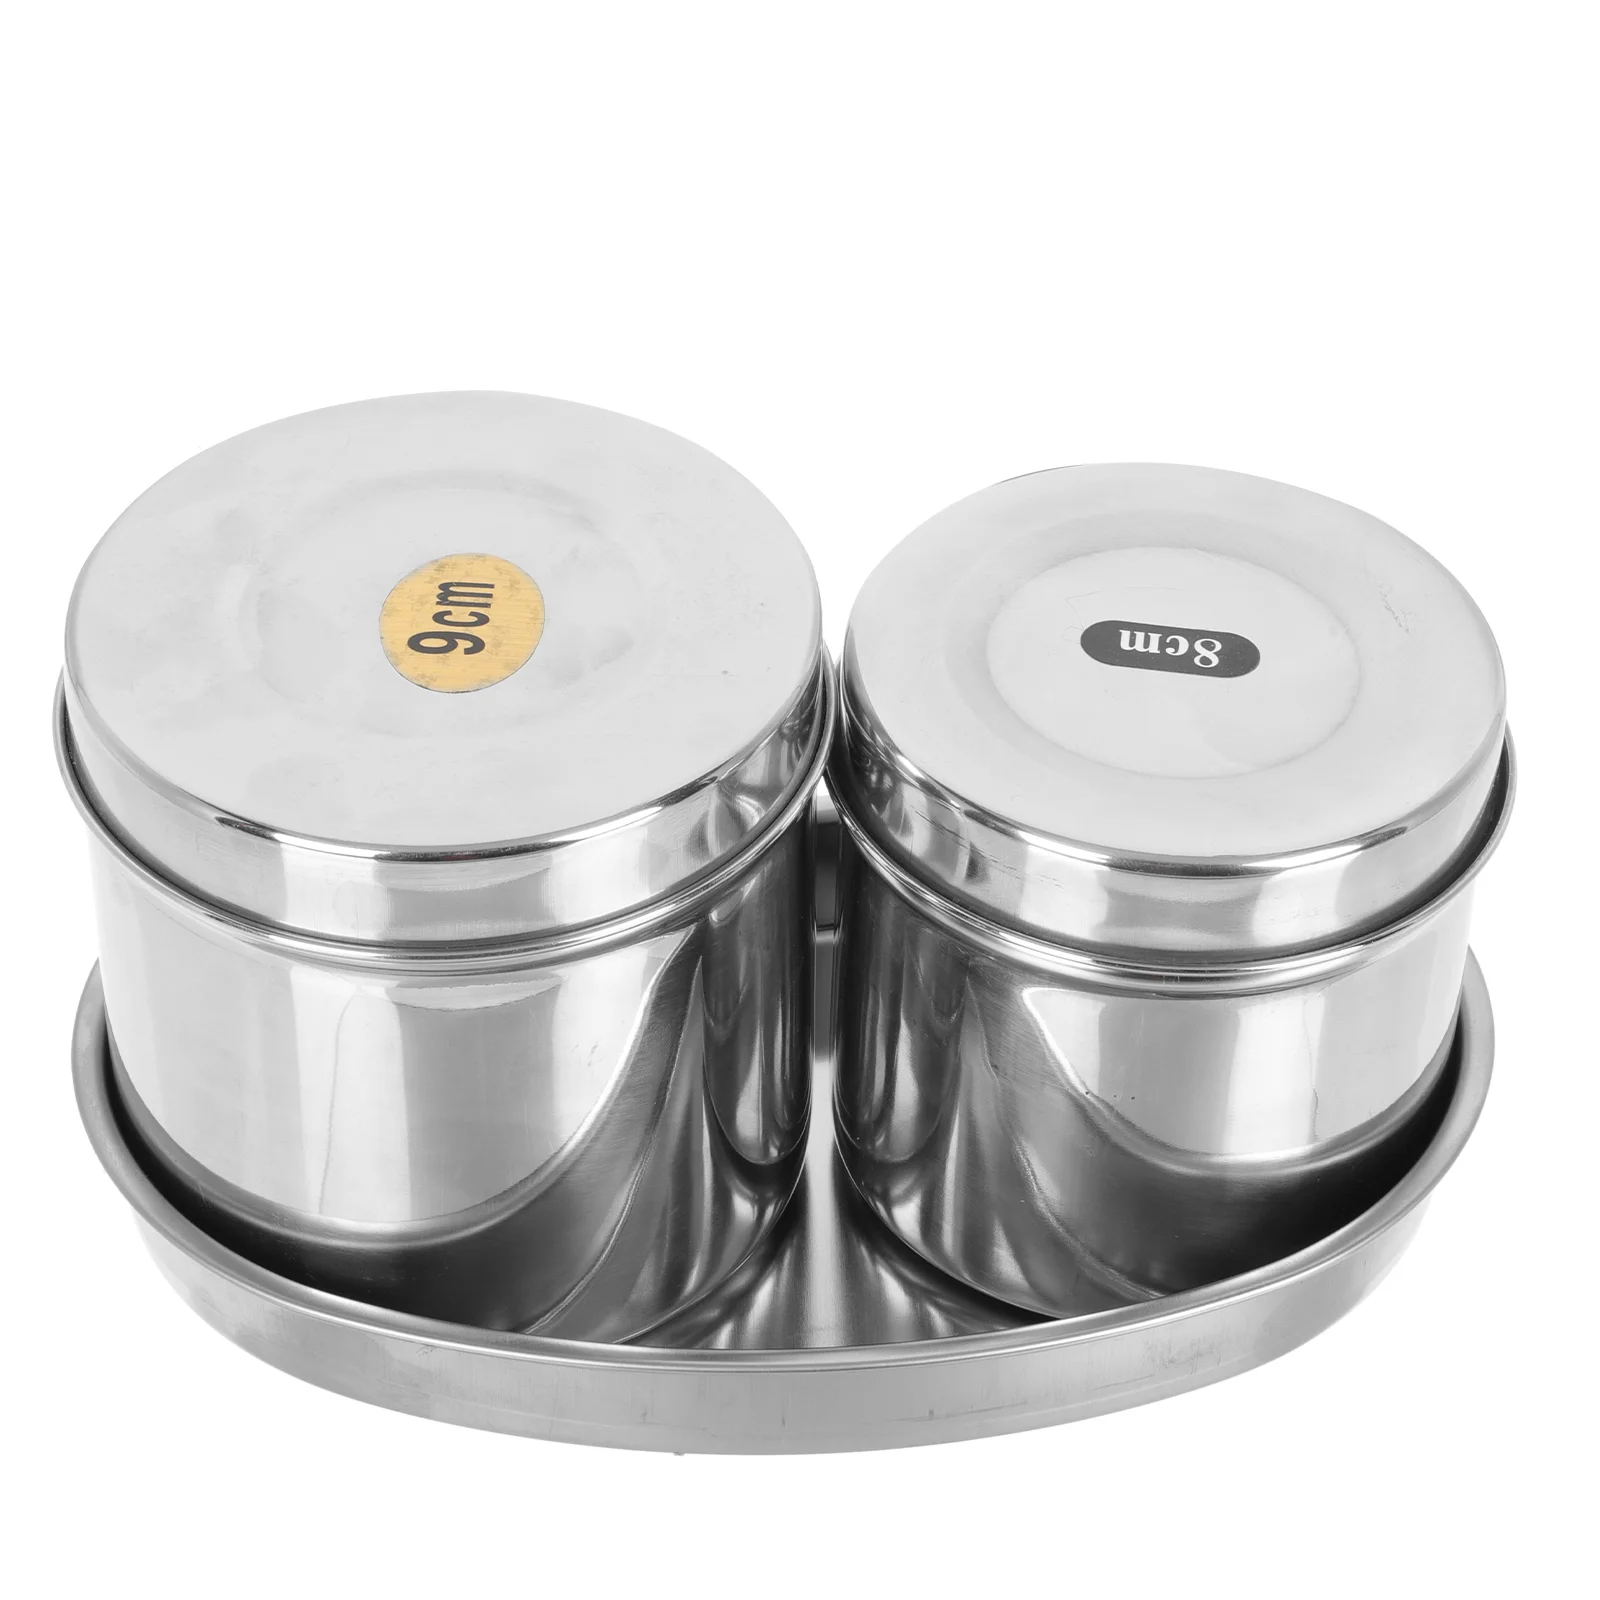 

Sterilizer Set Bend Shape Plate Medical Cylinder Unguent Container Cotton Balls Storage Tank Makeup Containers